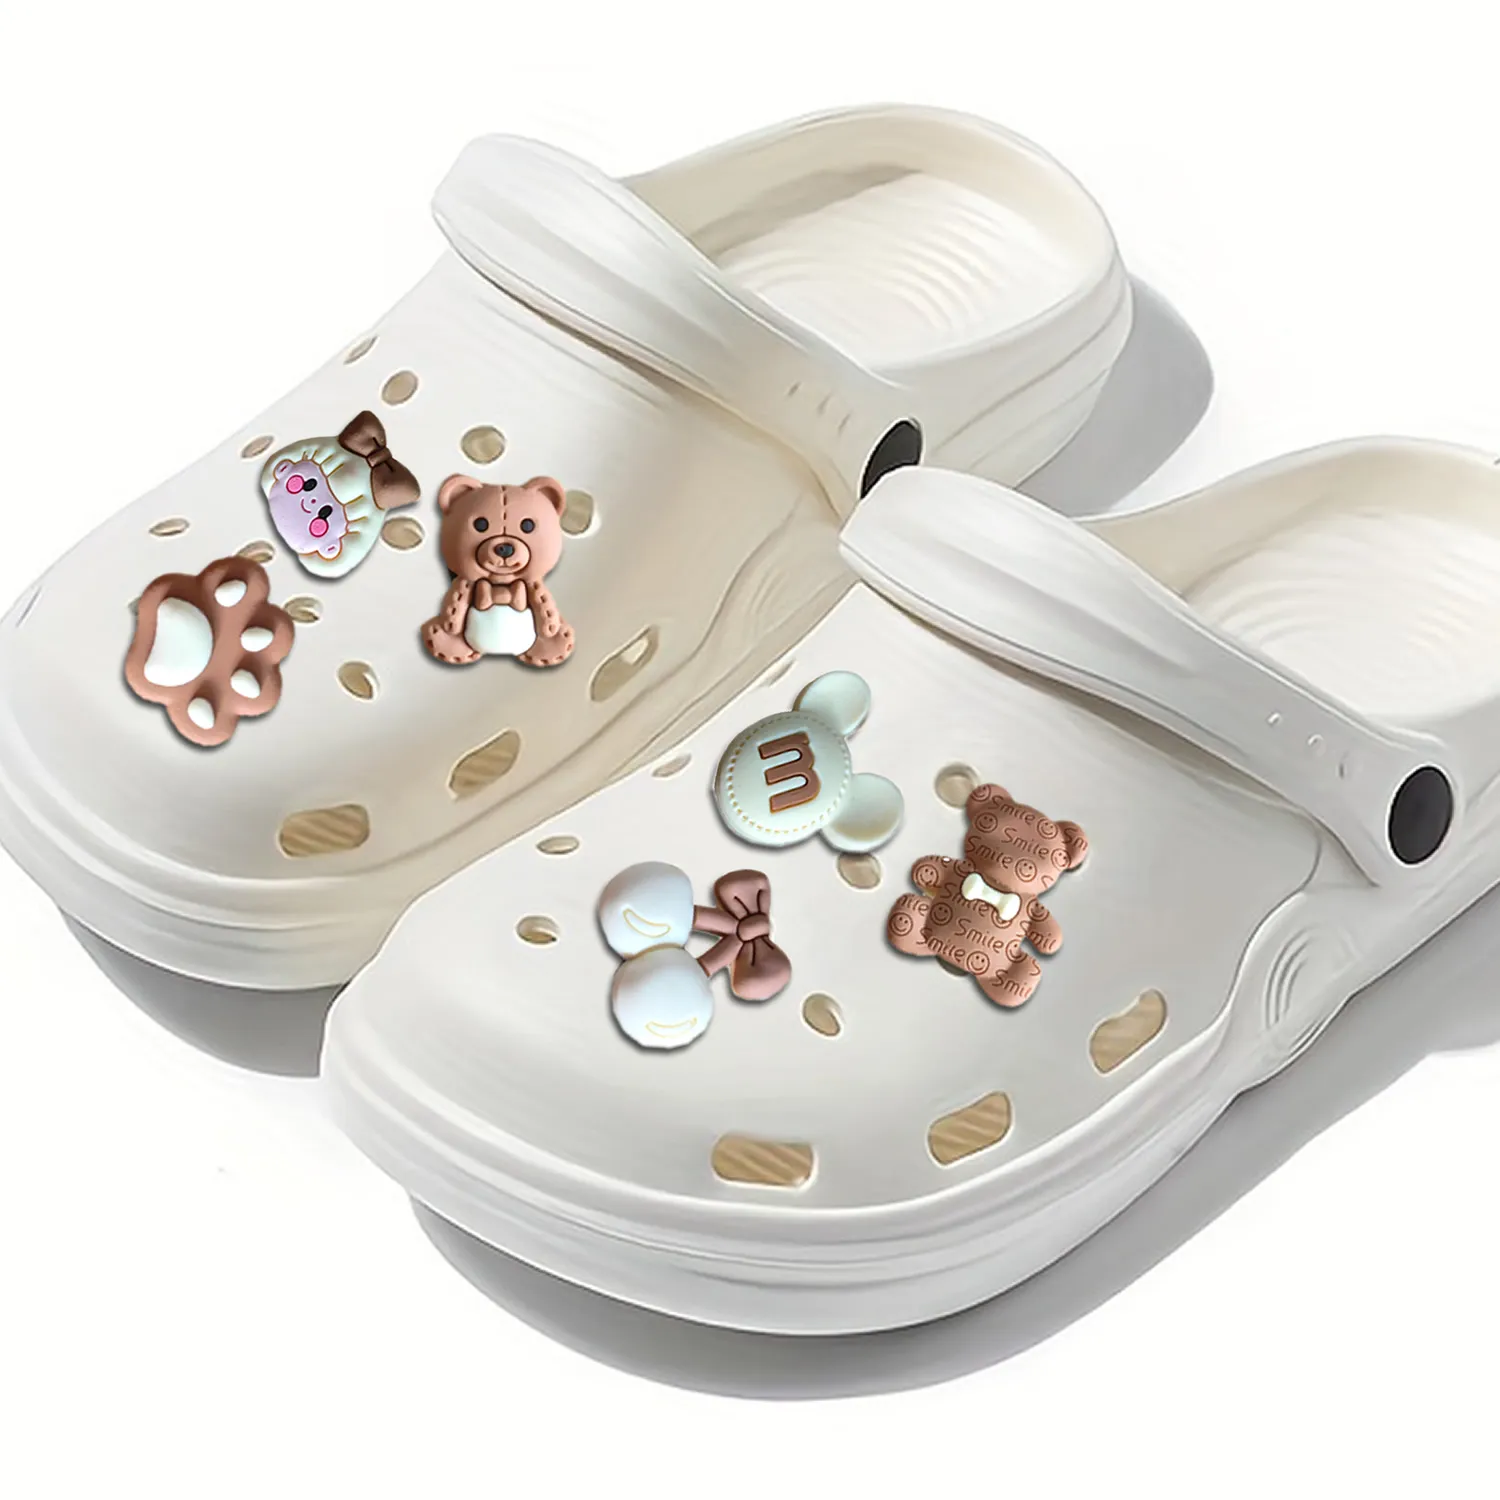 20pcs shoe charms for cro c decoration bear shaped diy shoes charms for boy girl teens men women